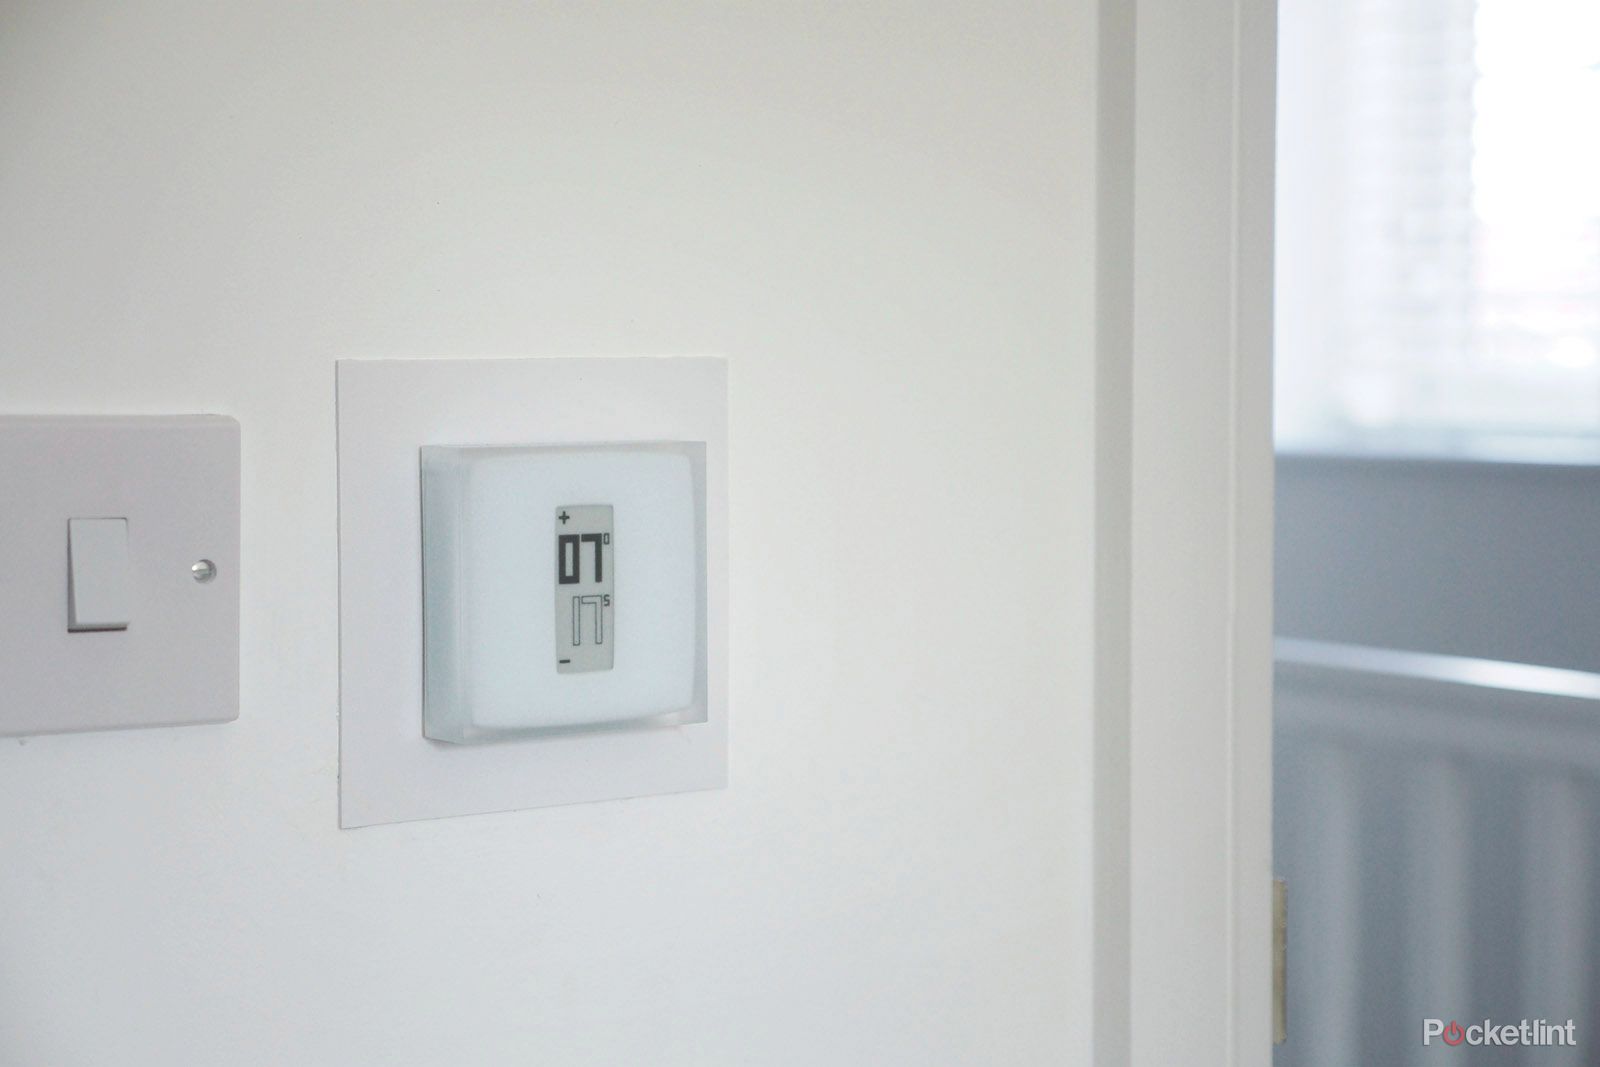 Netatmo Smart Thermostat review photo 19